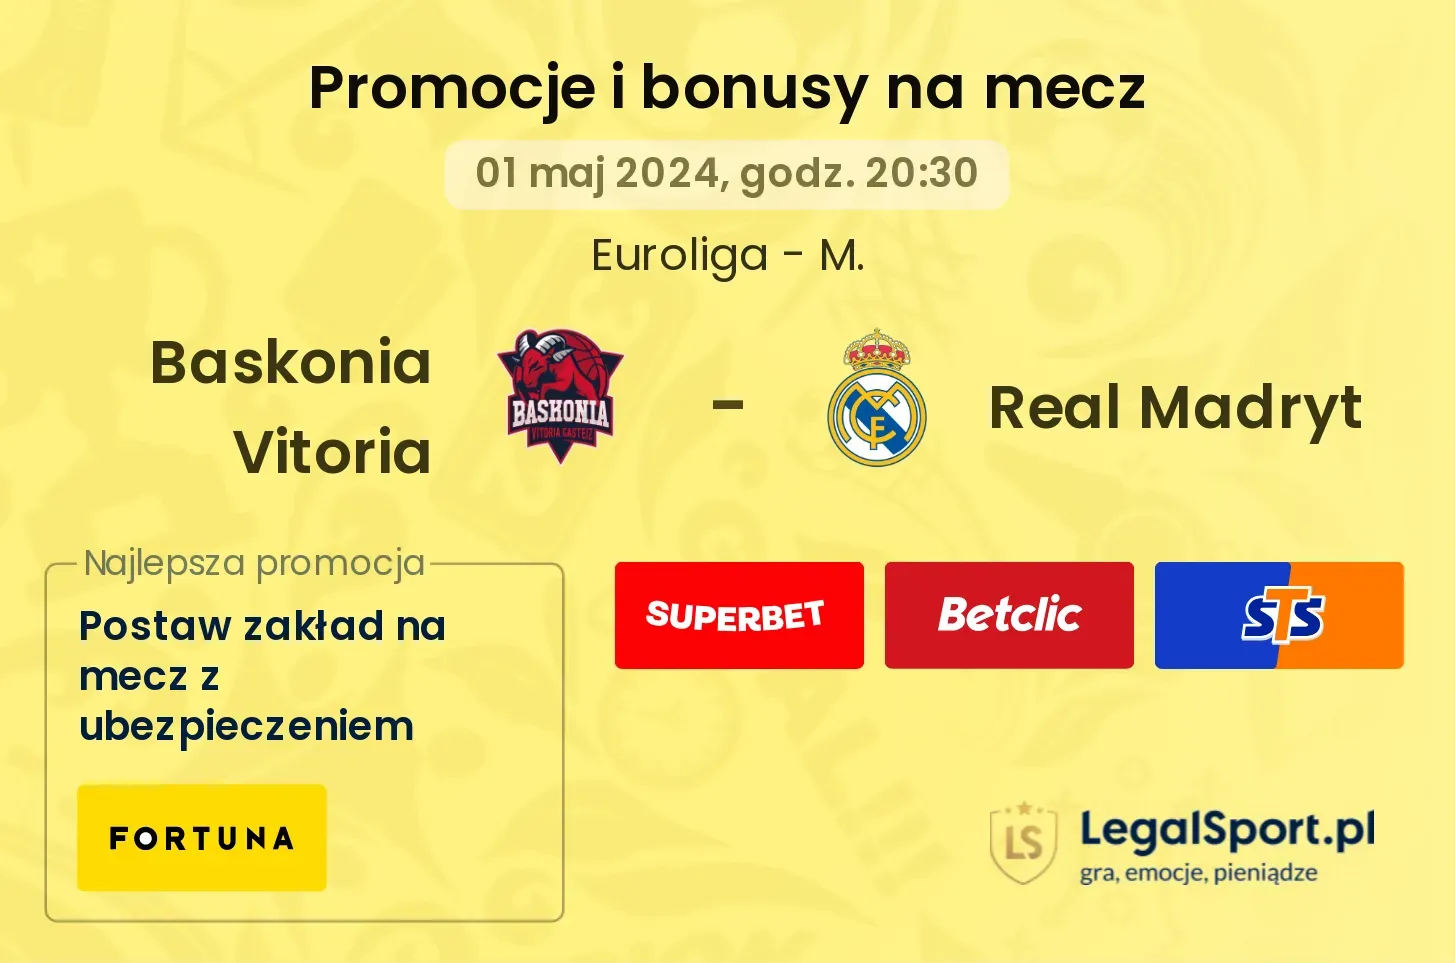 Baskonia Vitoria - Real Madryt promocje bonusy na mecz